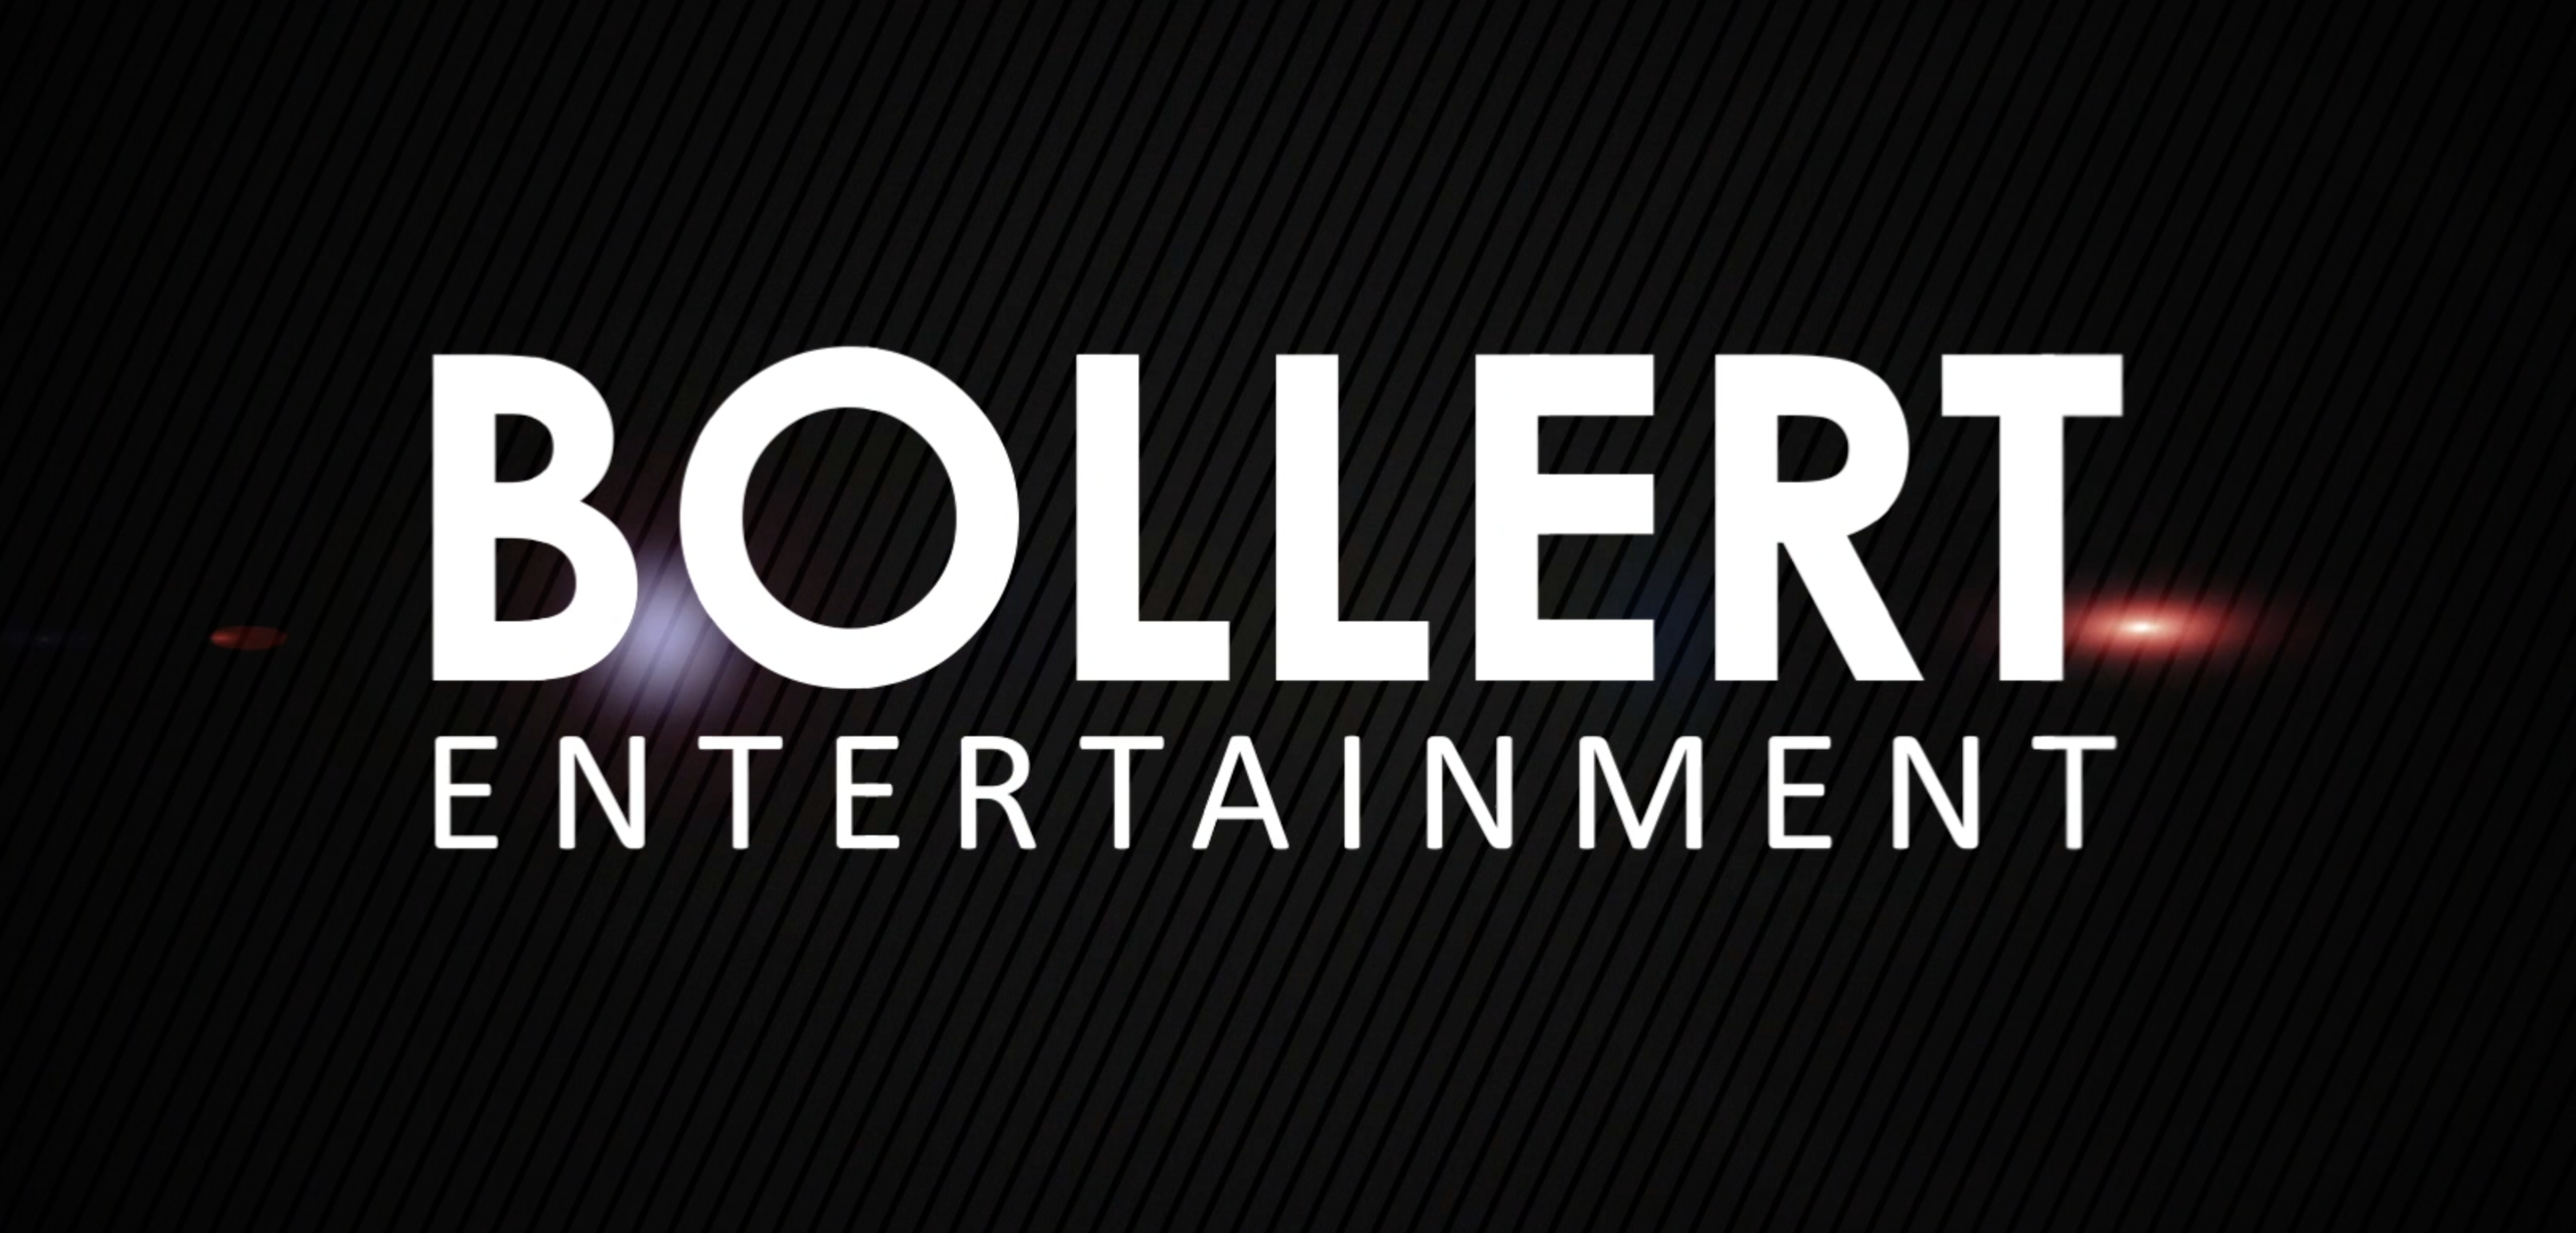 Bollert Entertainment